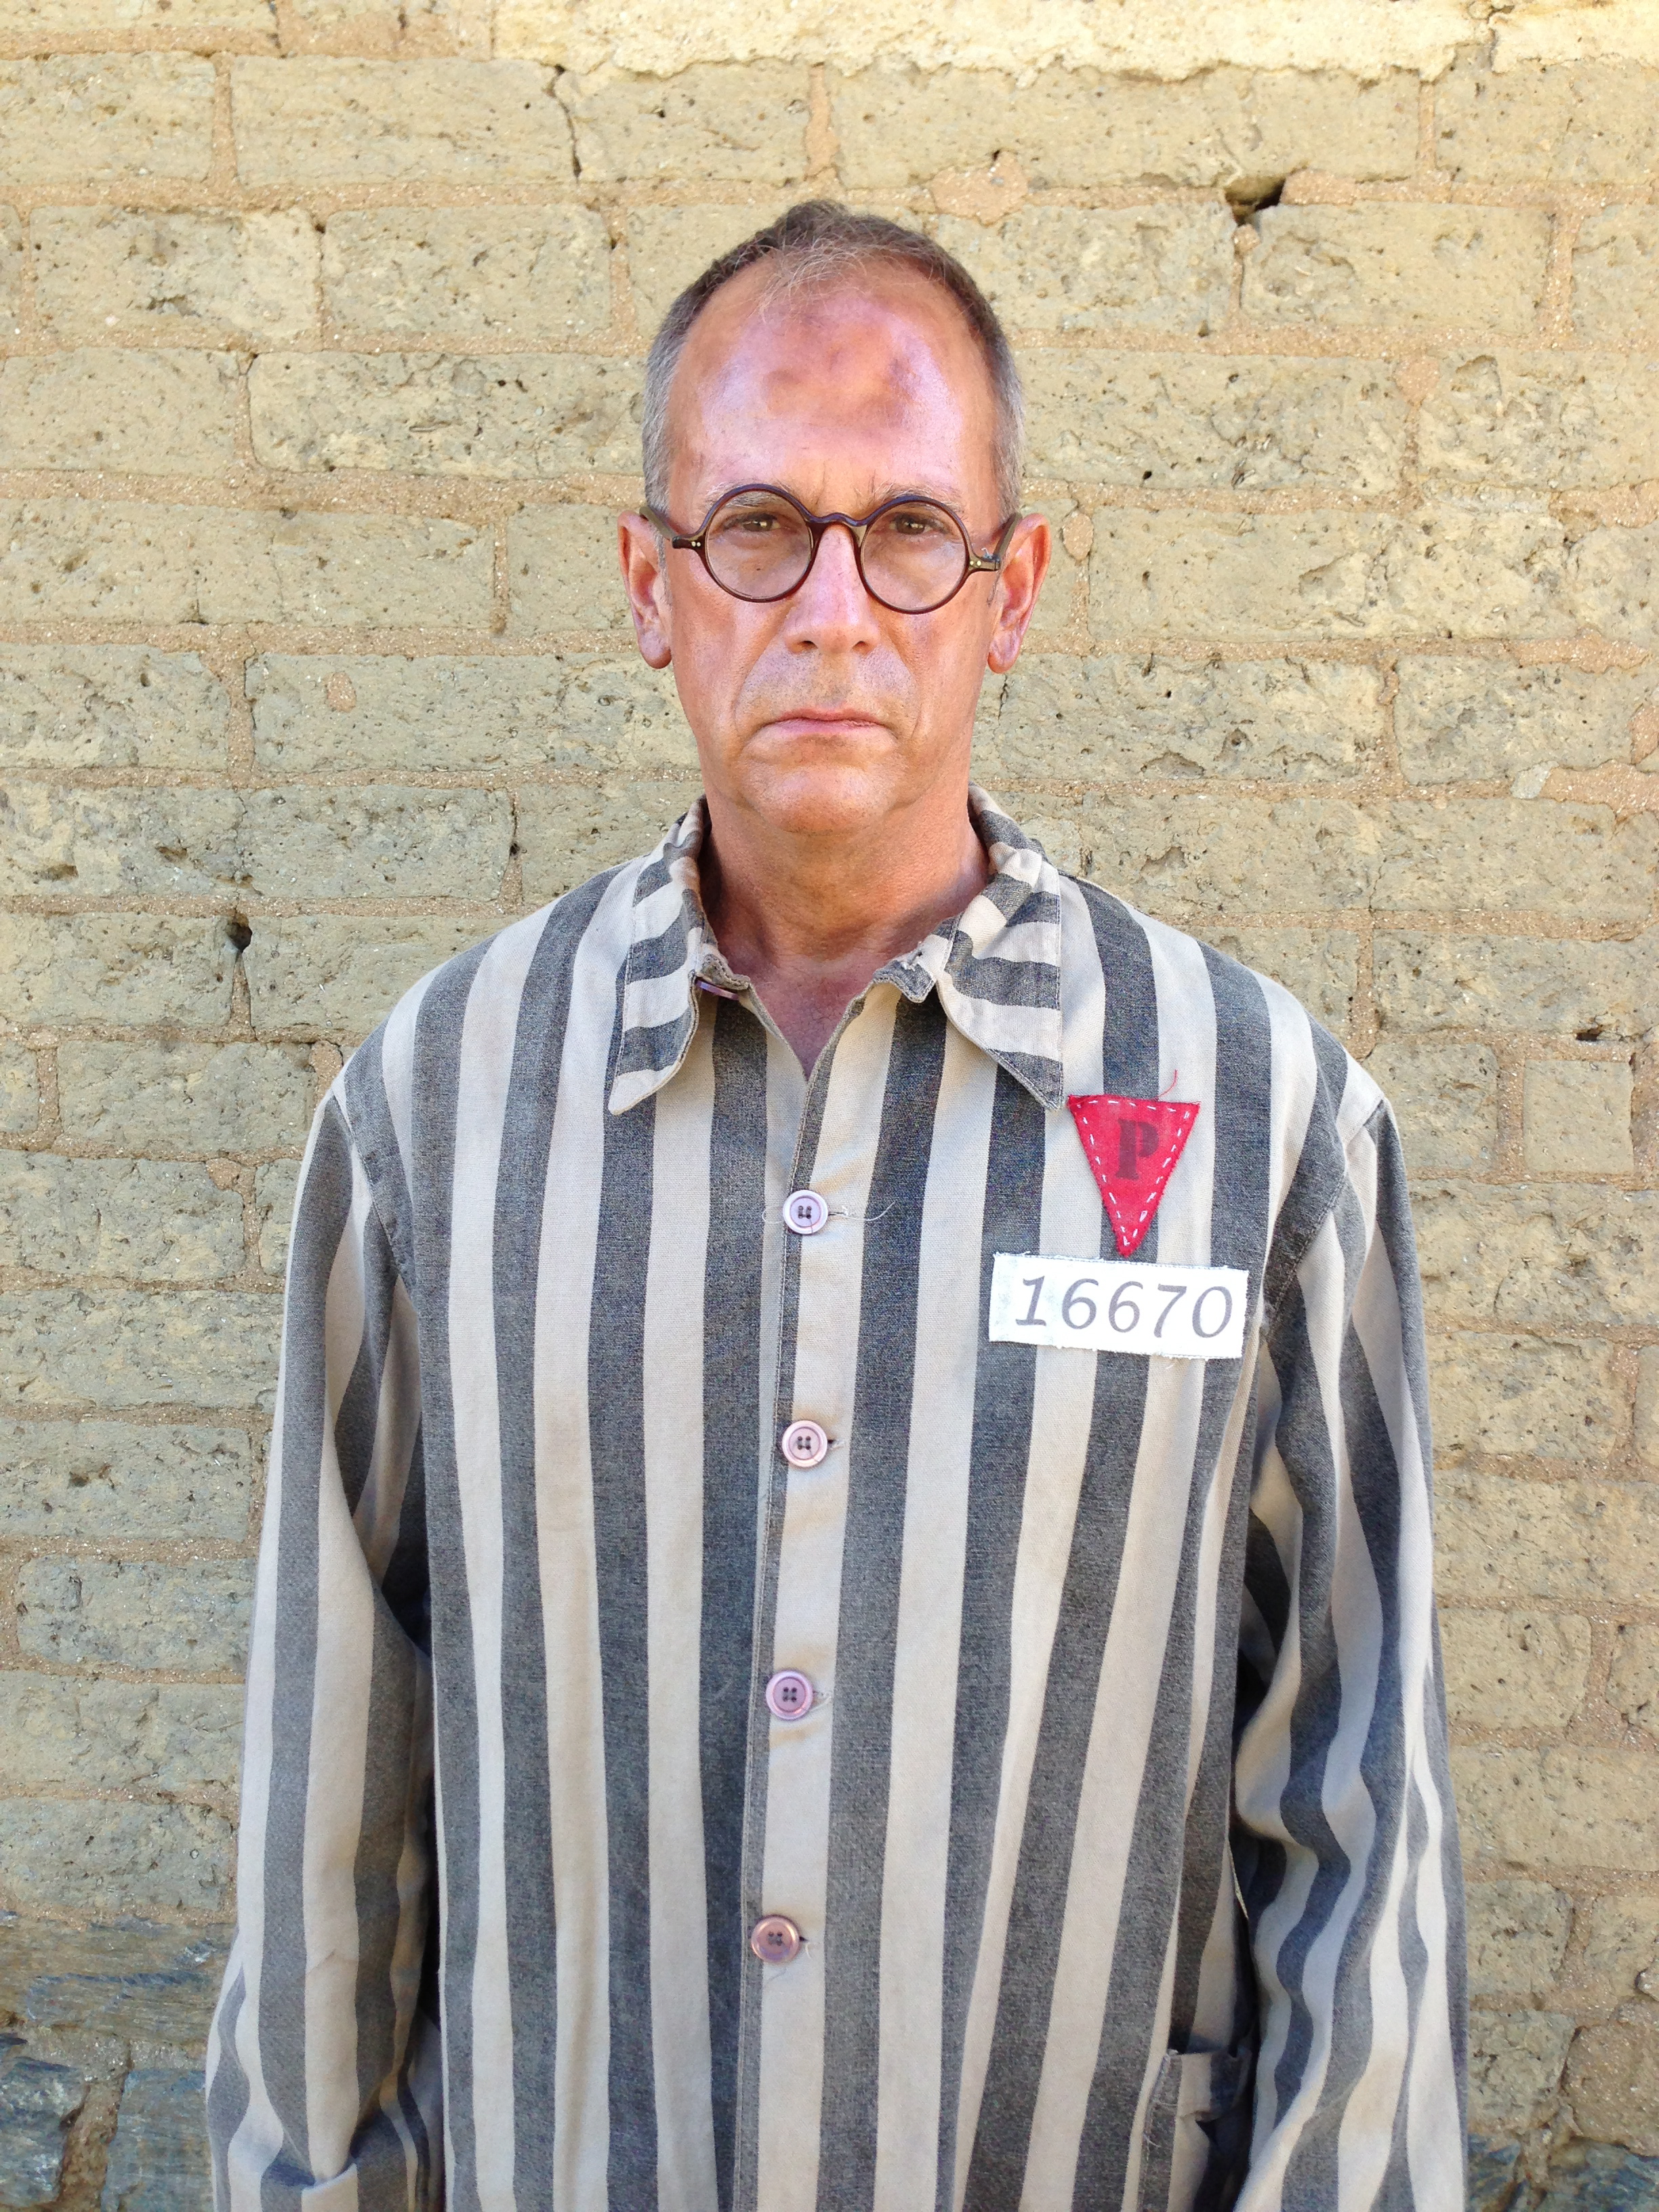 Billy Gillespie as Maximilian Kolbe on set of Saint of Auschwitz